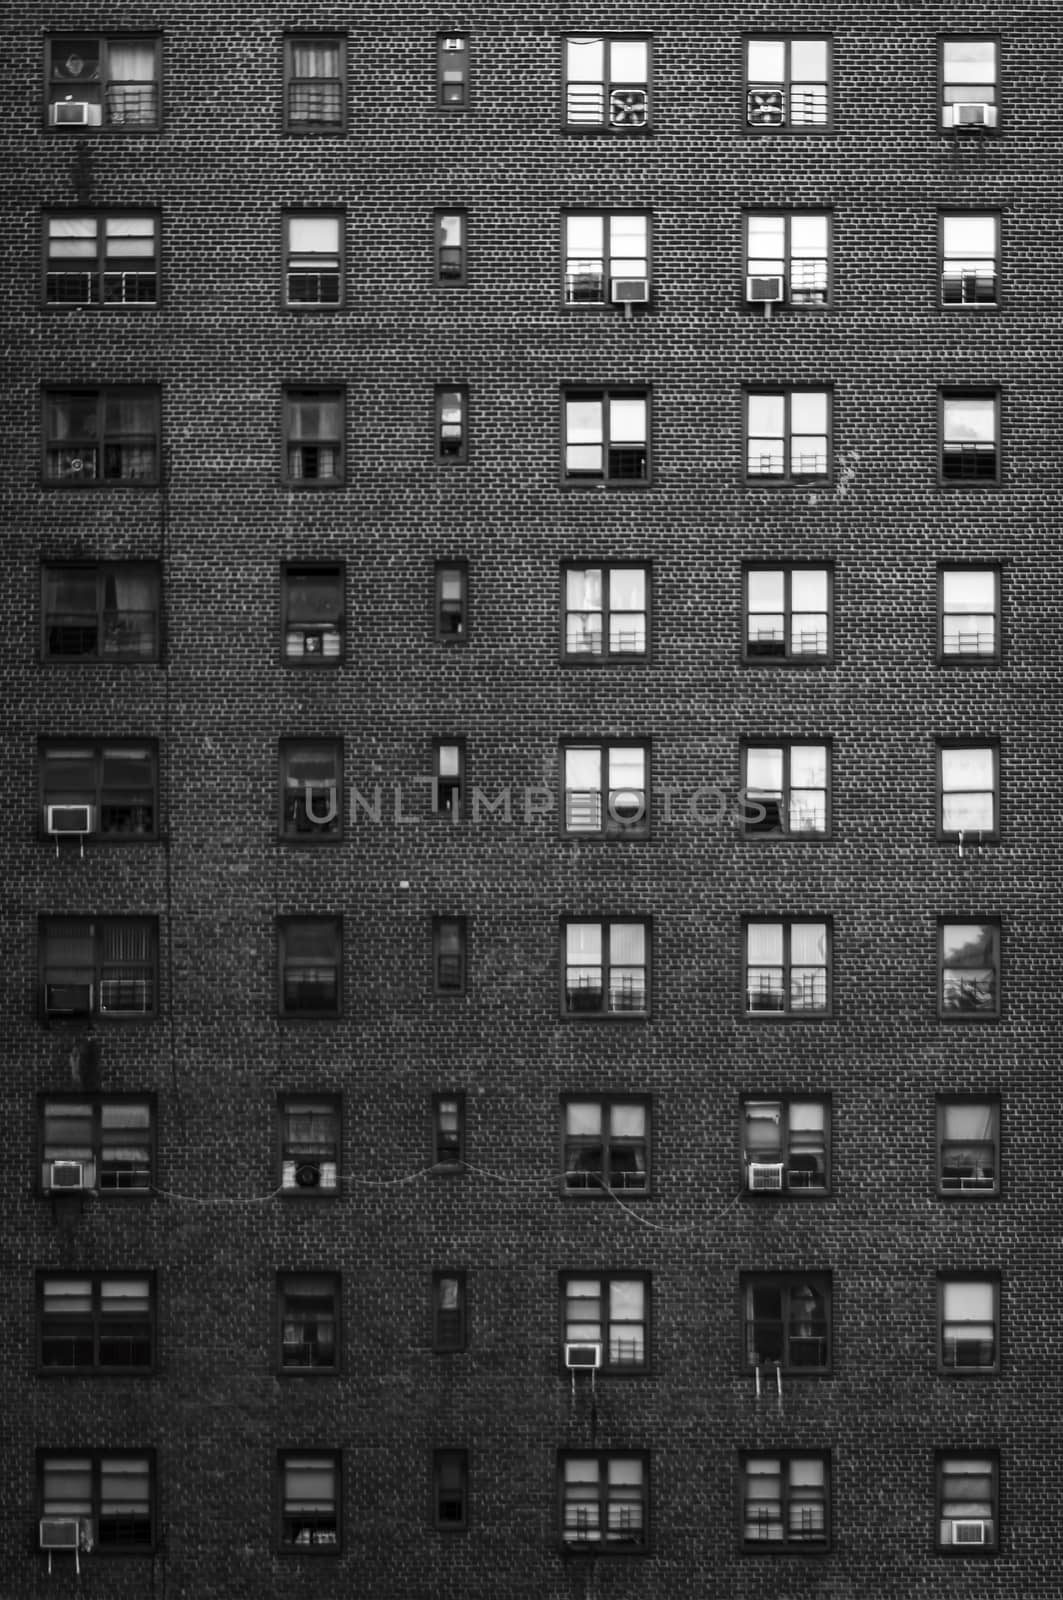 Building in NYC by patricklienin